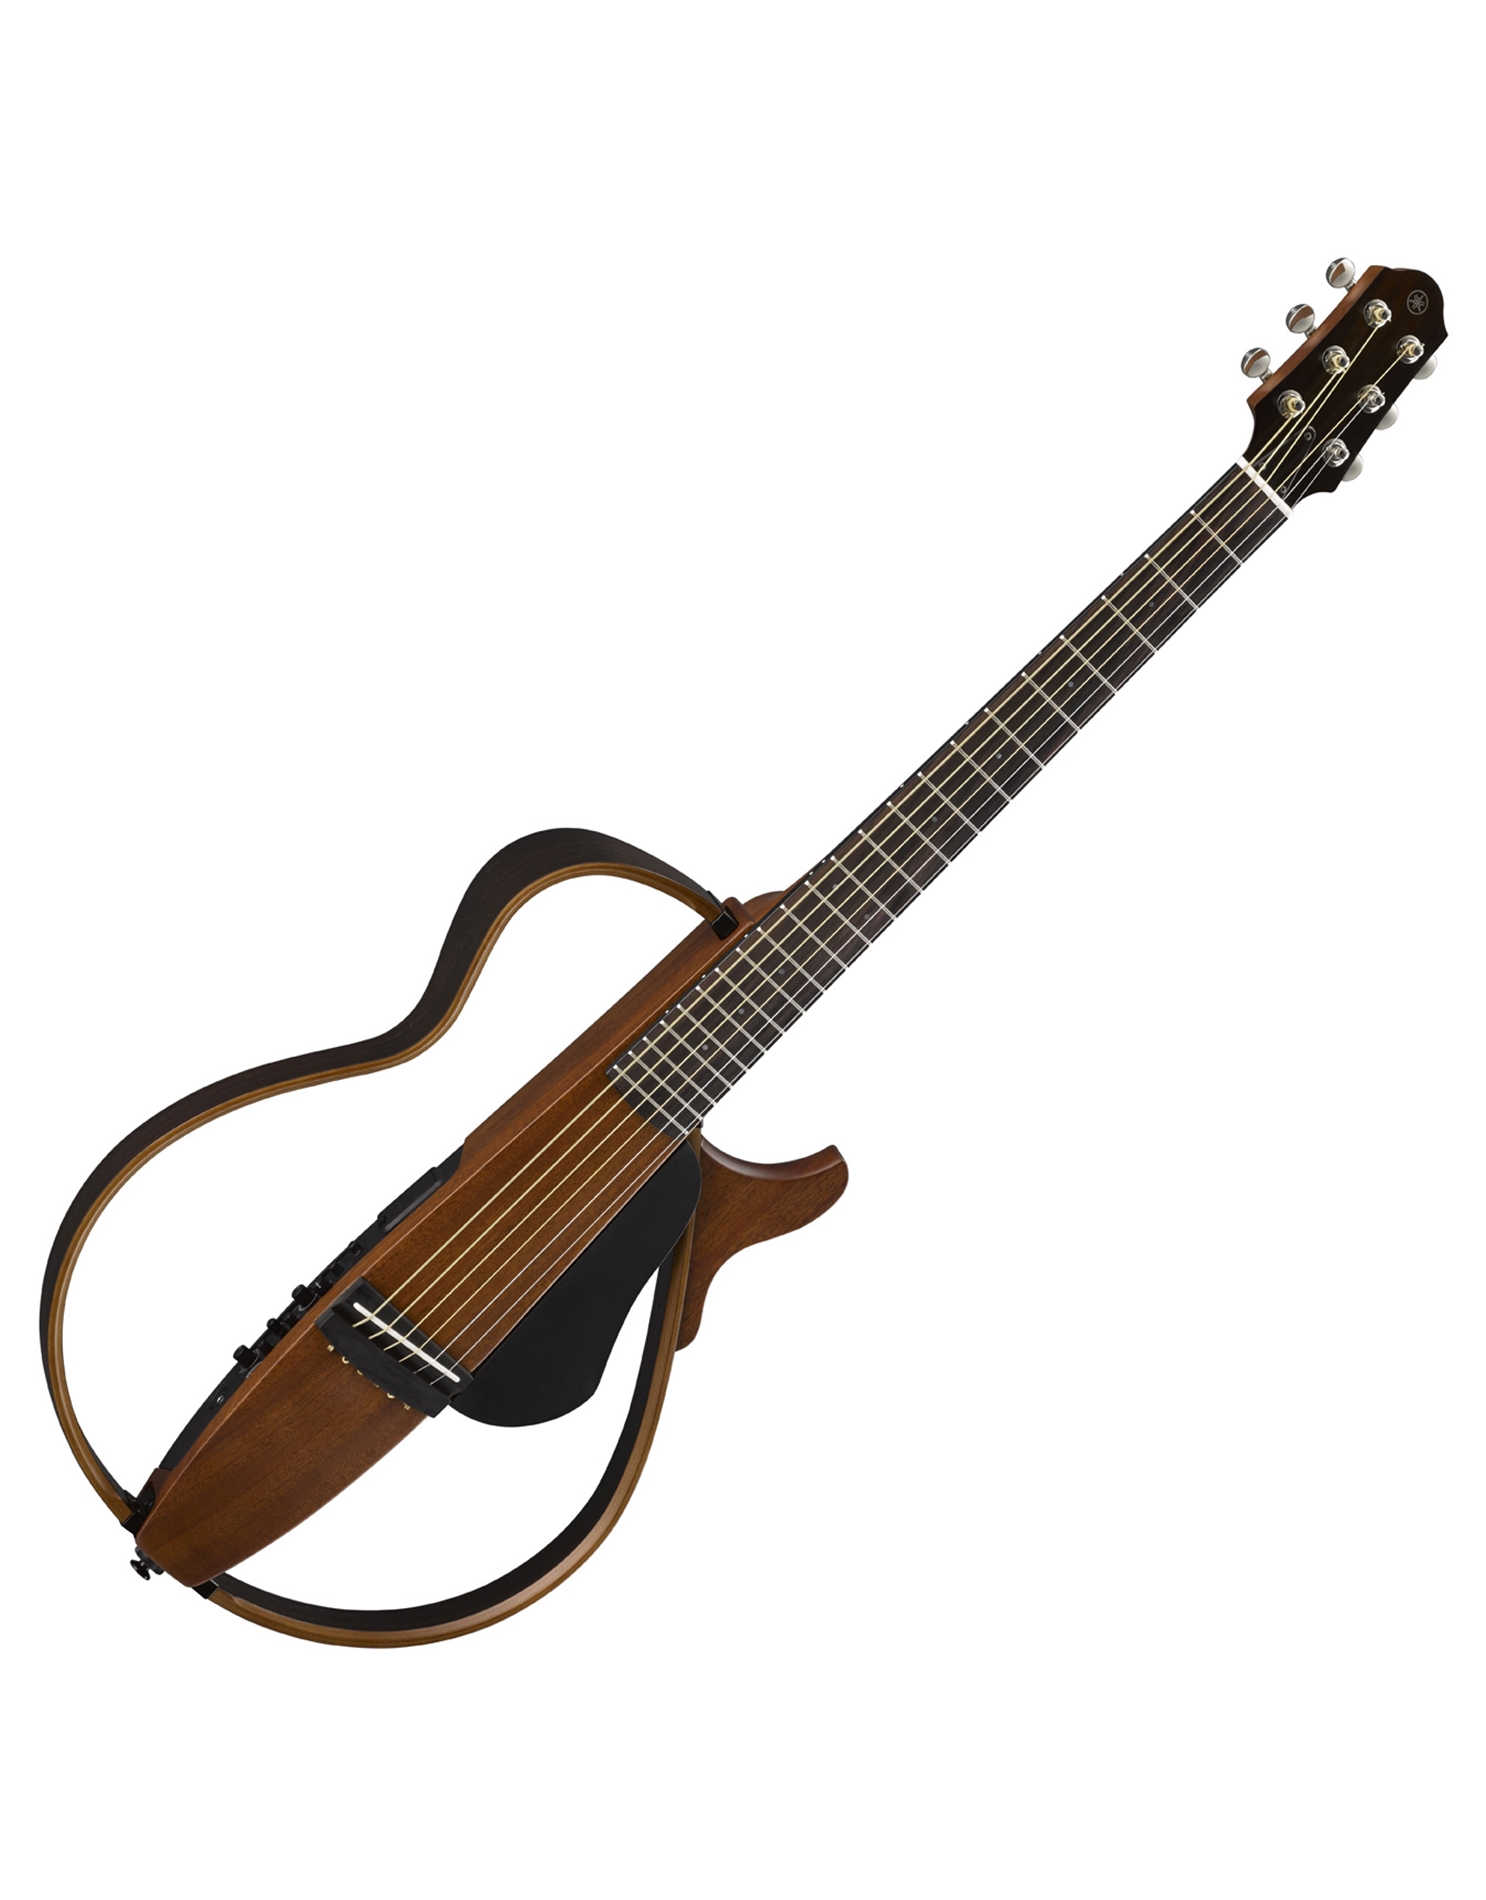 YAMAHA SLG110S アコースティックギター インターネットショッピングにて購入の正規品